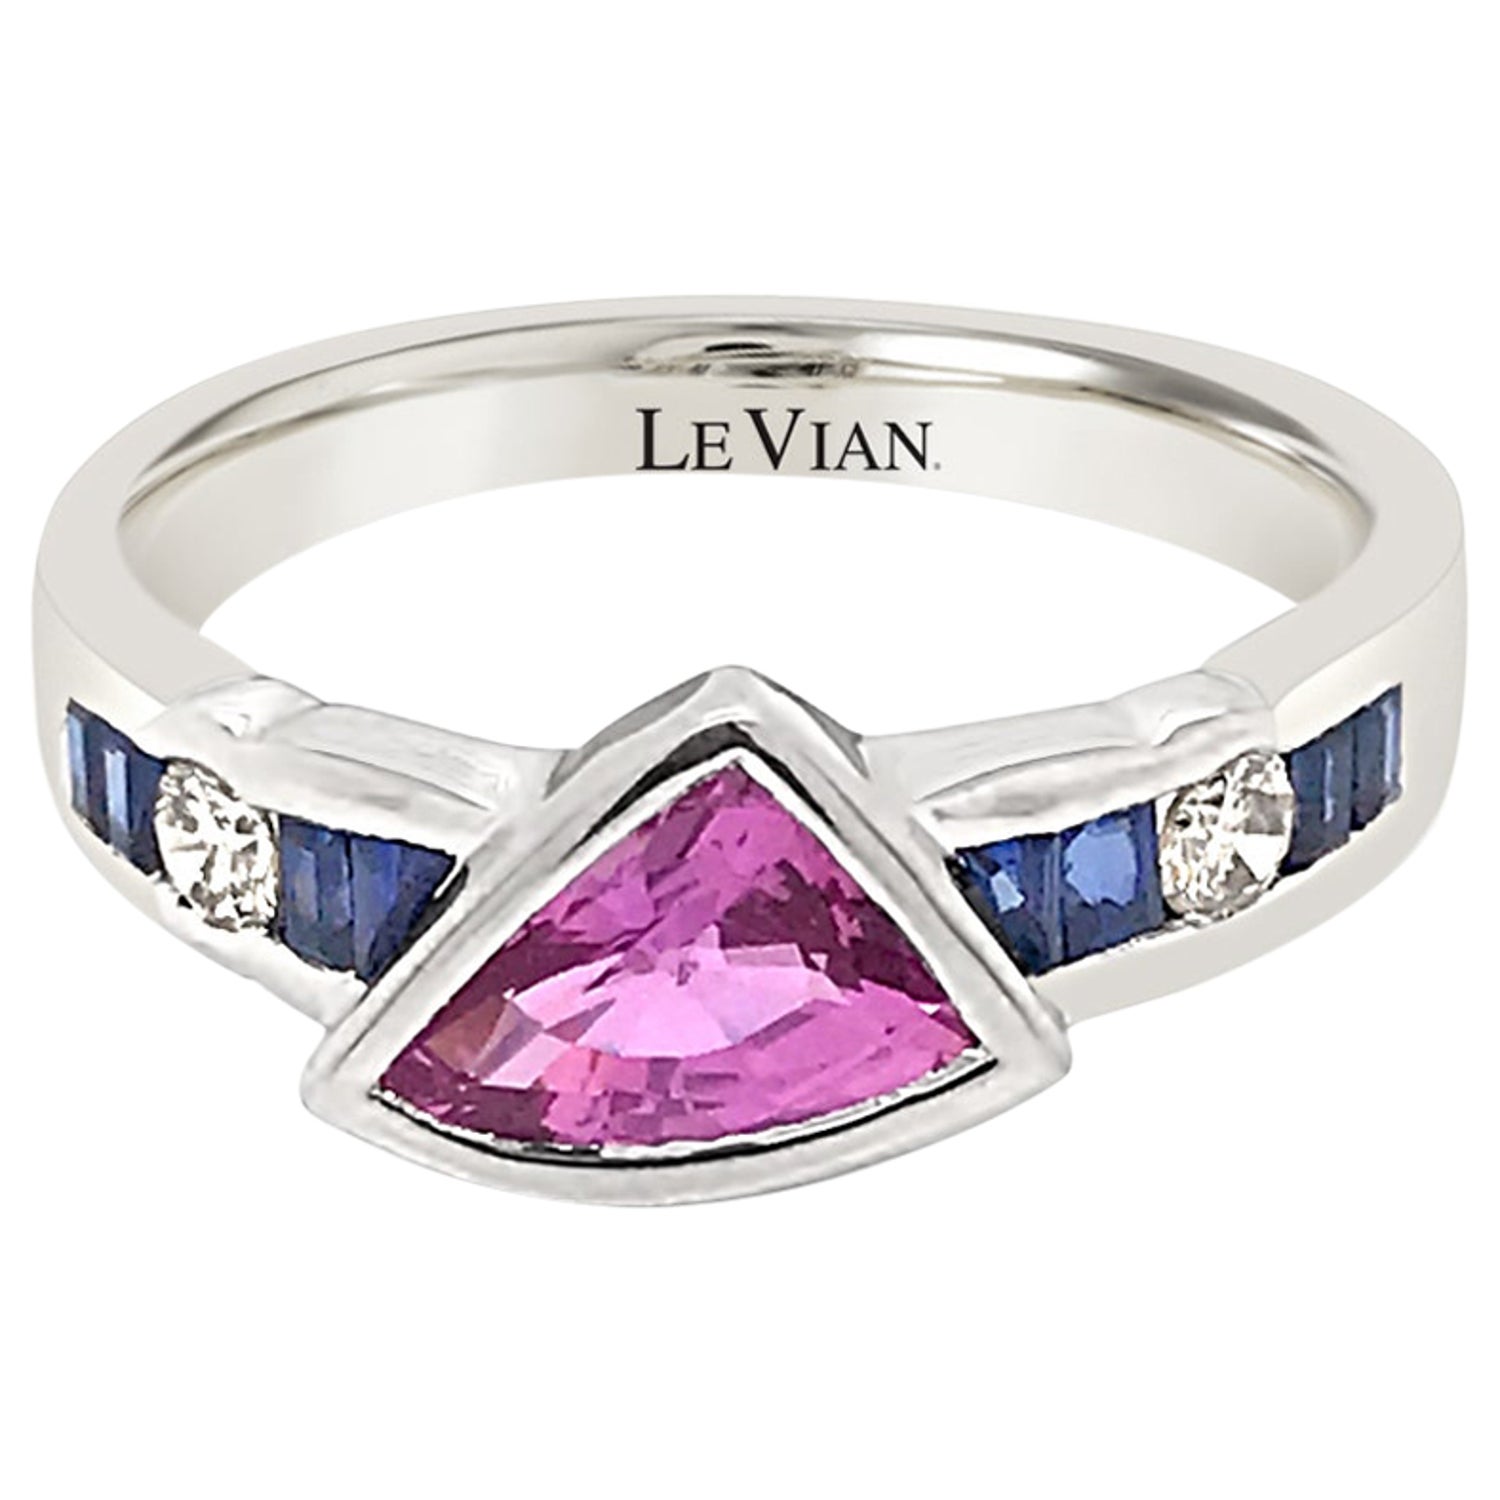 LeVian 18K White Gold Pink Sapphire Round Diamond Love Heart Cocktail Ring